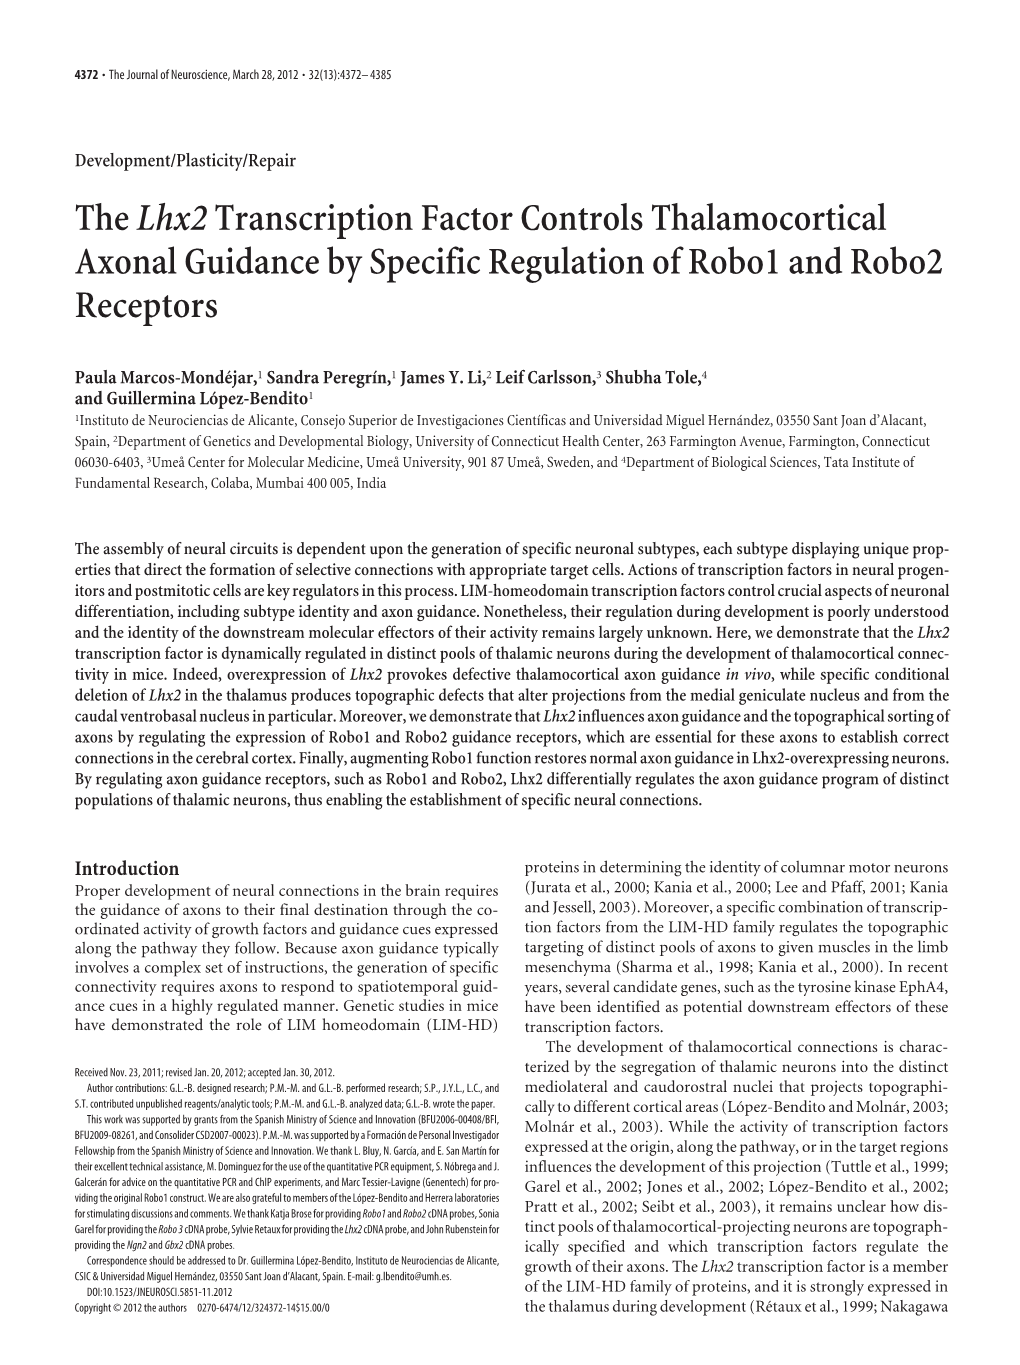 Thelhx2transcription Factor Controls Thalamocortical Axonal